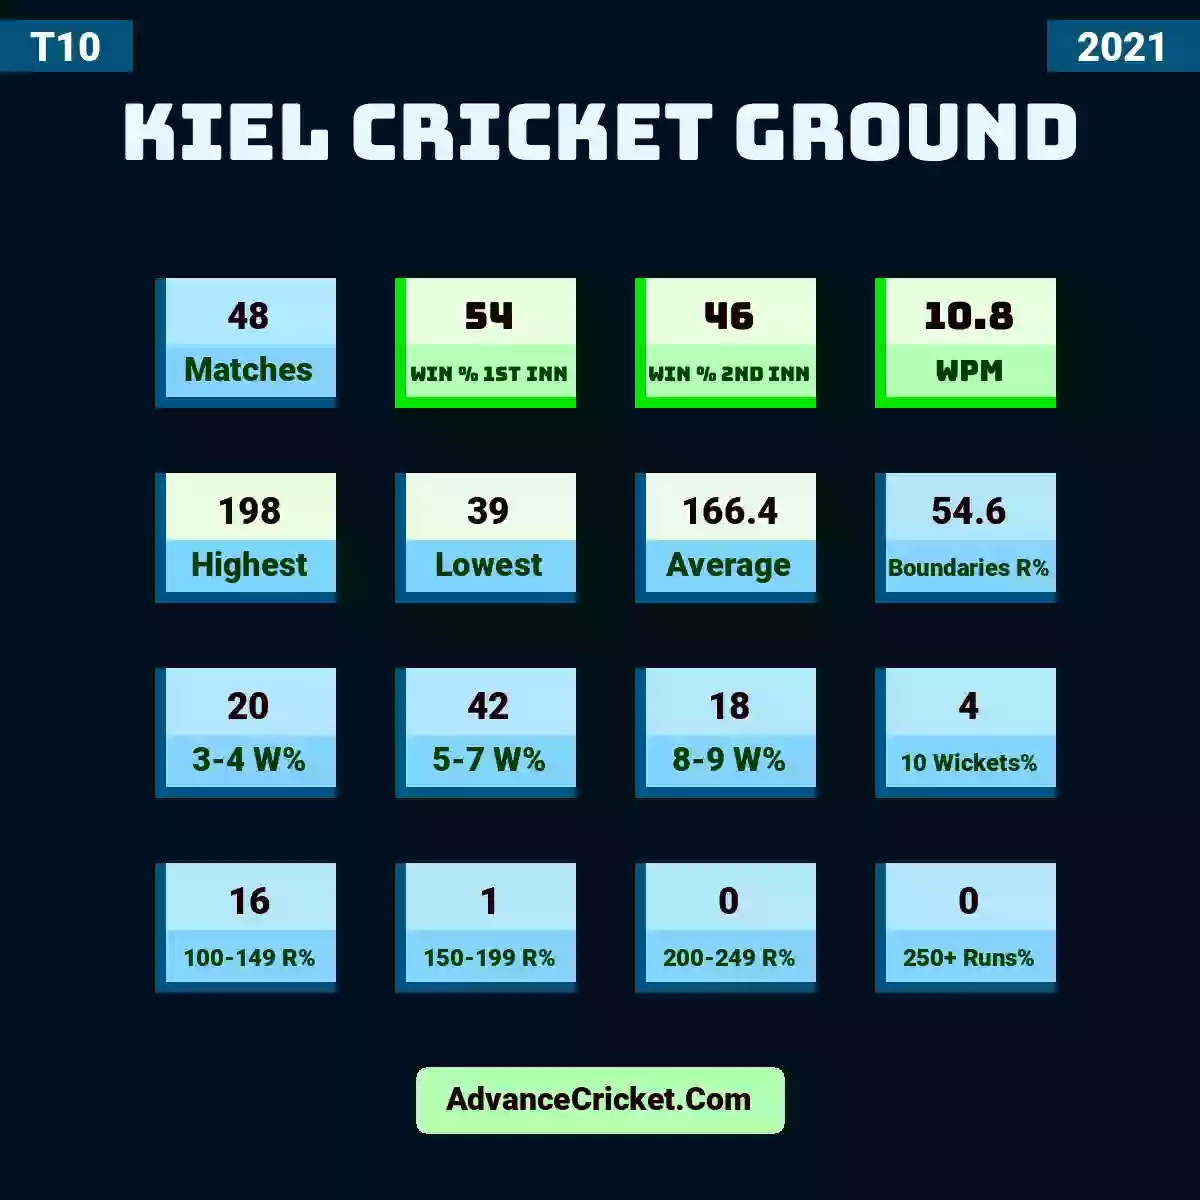 Image showing Kiel Cricket Ground with Matches: 48, Win % 1st Inn: 54, Win % 2nd Inn: 46, WPM: 10.8, Highest: 198, Lowest: 39, Average: 166.4, Boundaries R%: 54.6, 3-4 W%: 20, 5-7 W%: 42, 8-9 W%: 18, 10 Wickets%: 4, 100-149 R%: 16, 150-199 R%: 1, 200-249 R%: 0, 250+ Runs%: 0.